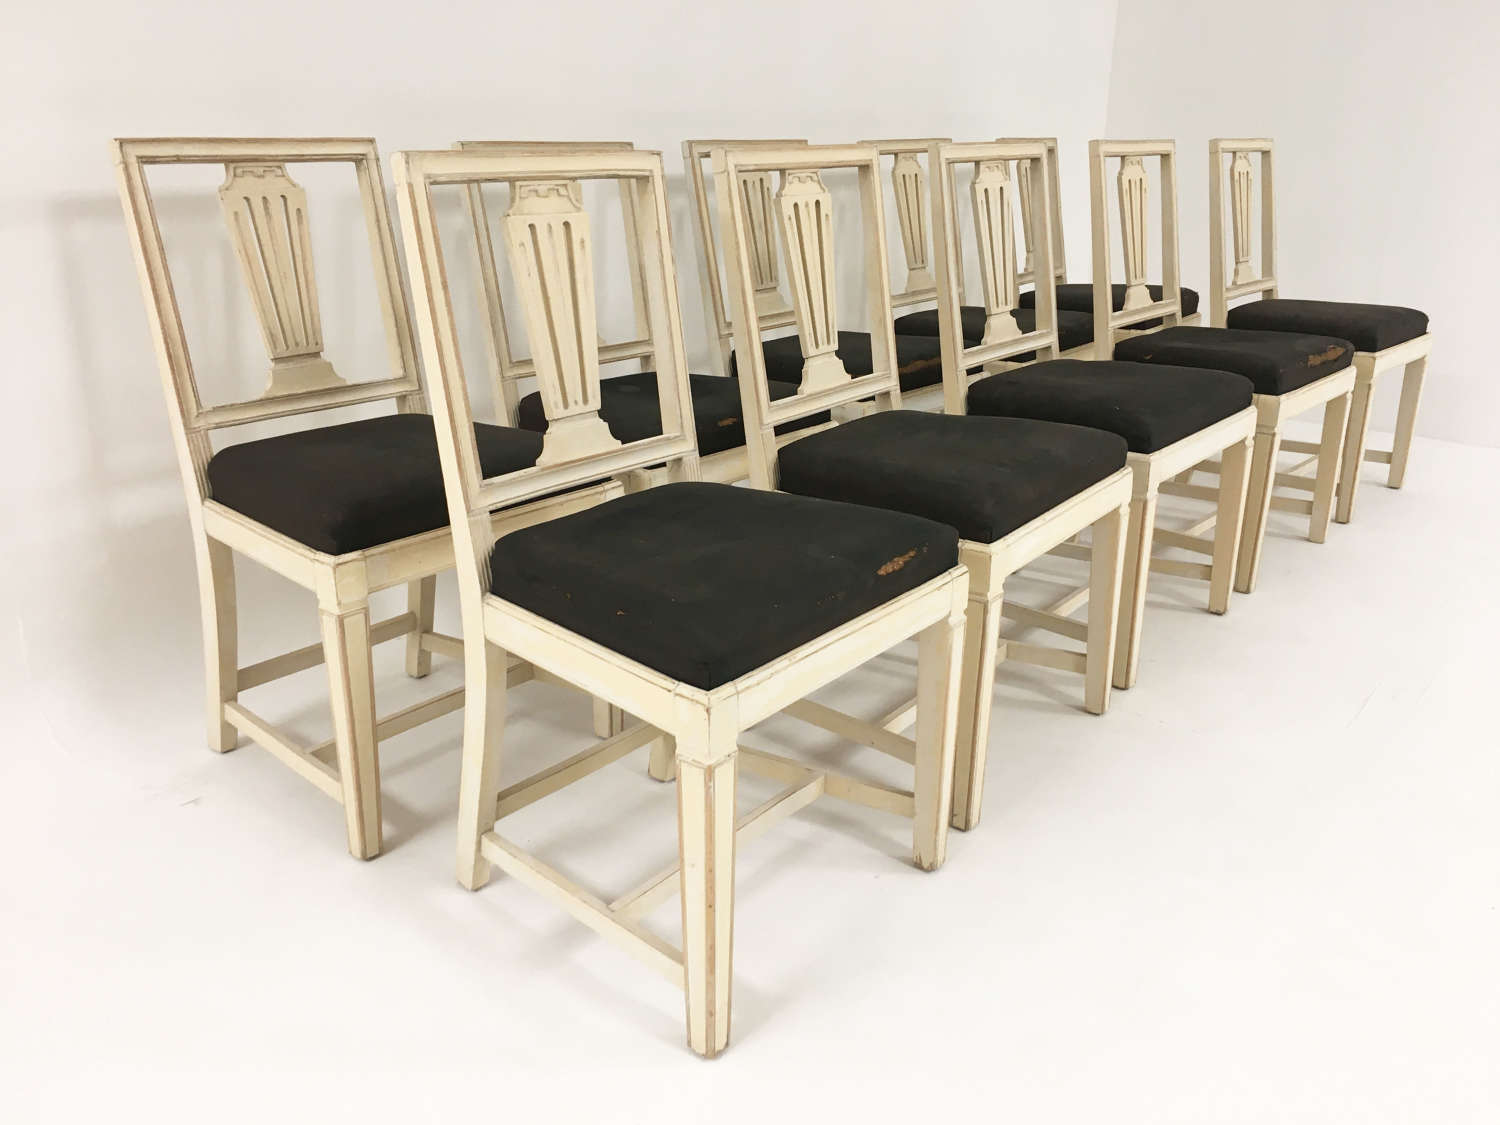 Set of 10 19th c Swedish Dining Chairs - circa 1850